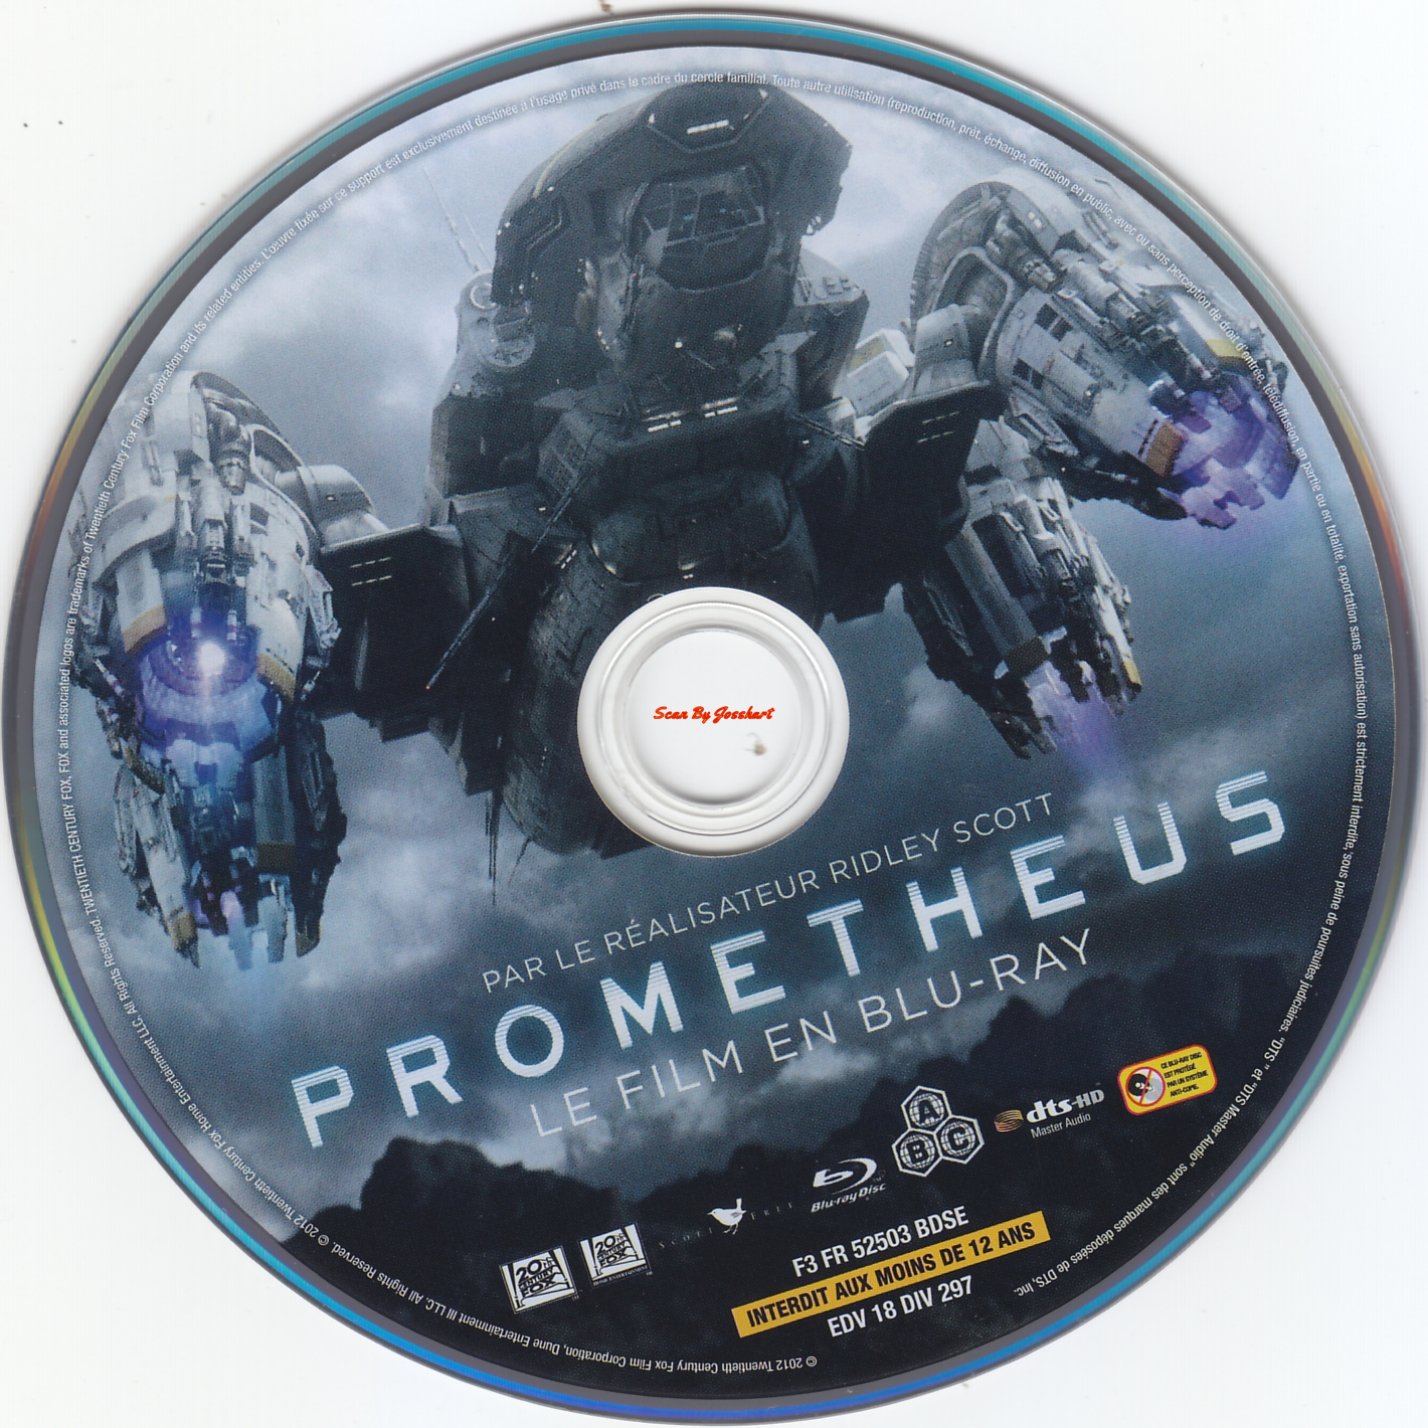 Prometheus (BLU-RAY)